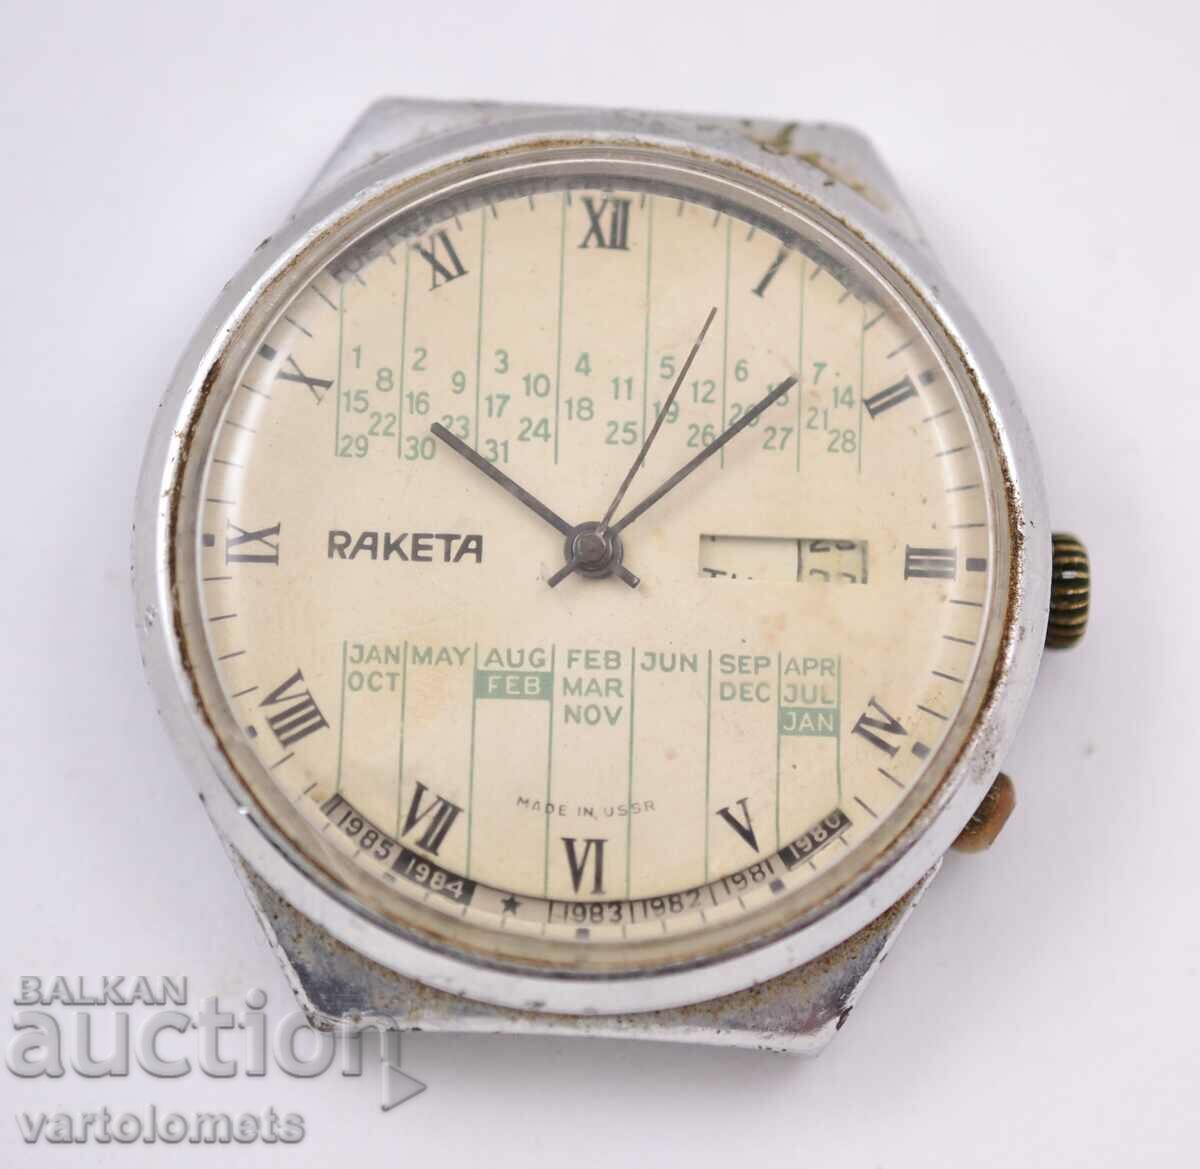 RAKETA men's watch, calendar - not working